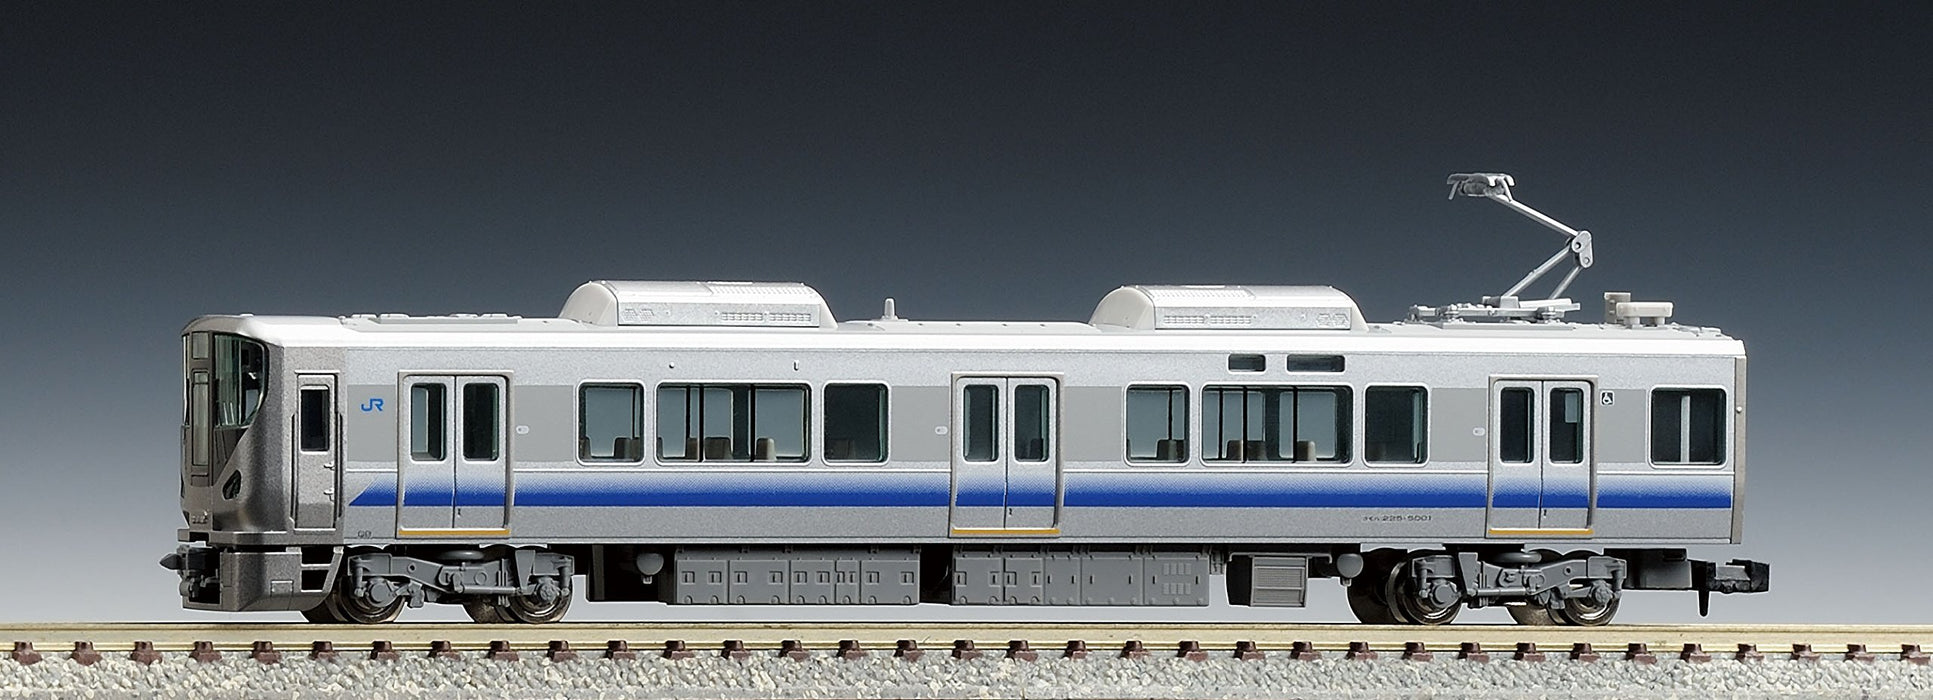 Tomytec Tomix N Gauge 225 Série 5000 Kit d'extension – Train miniature 92439